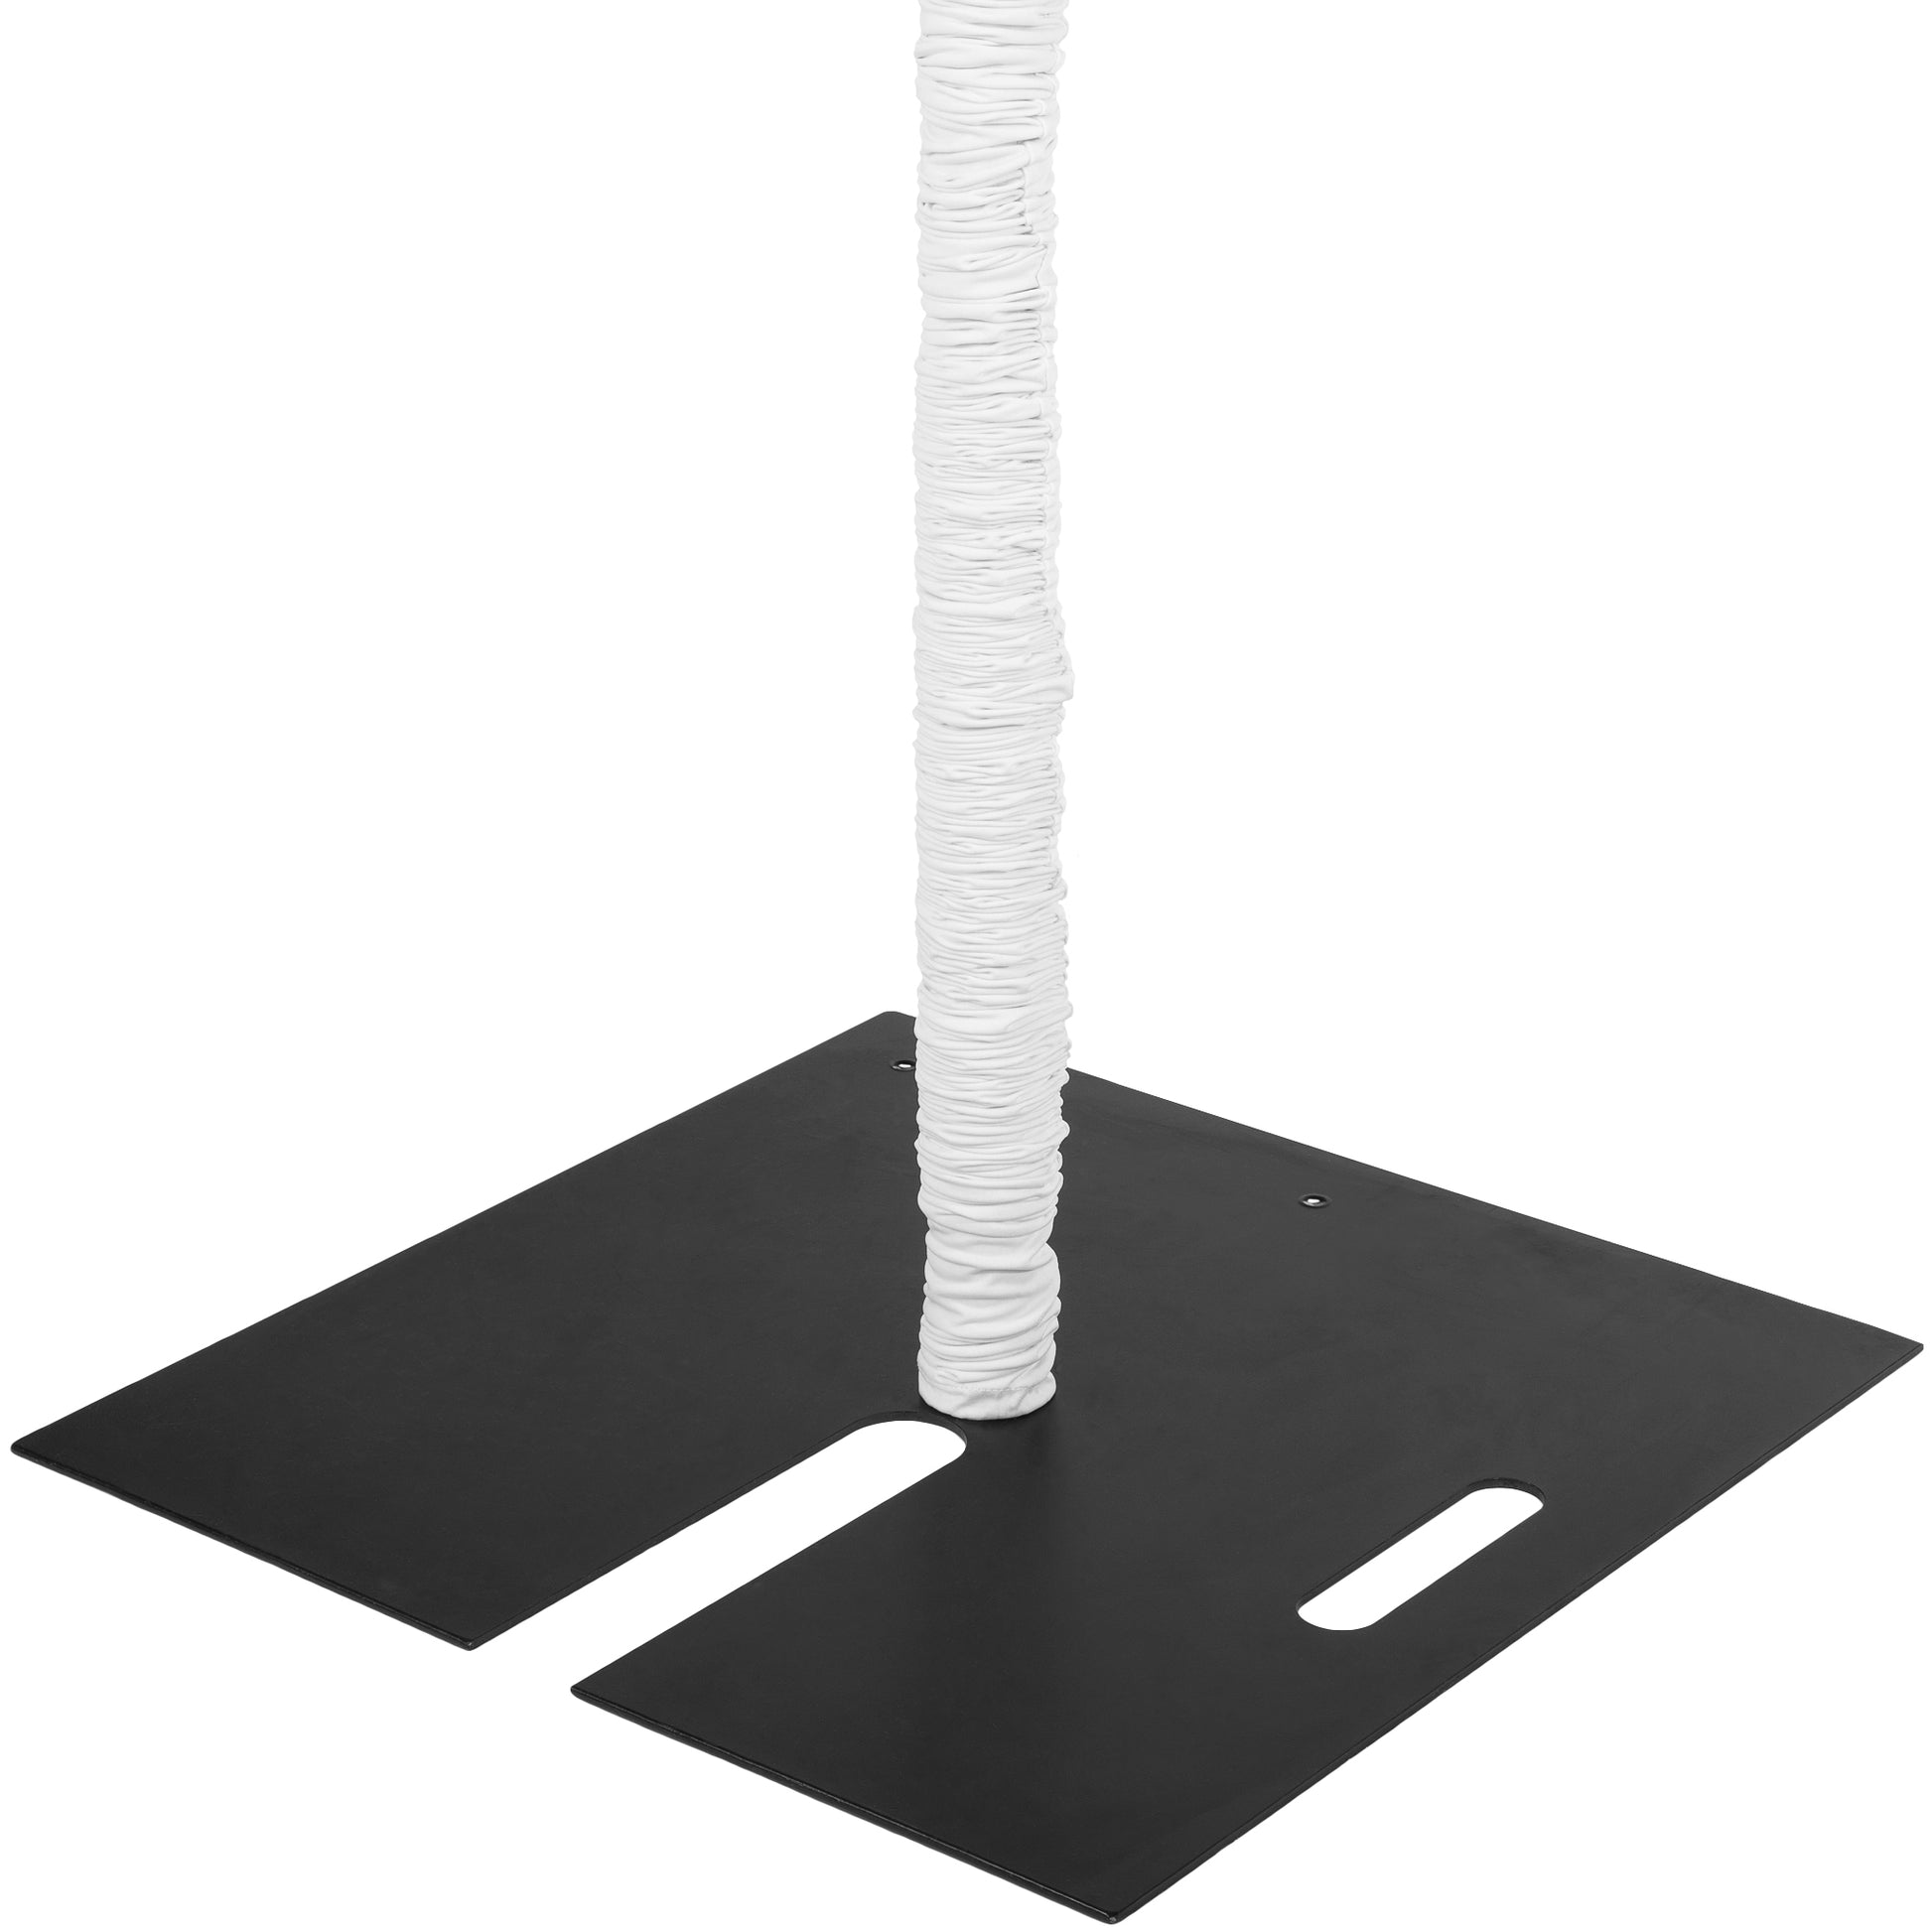 10ft Spandex Upright Pole Cover - White - CV Linens